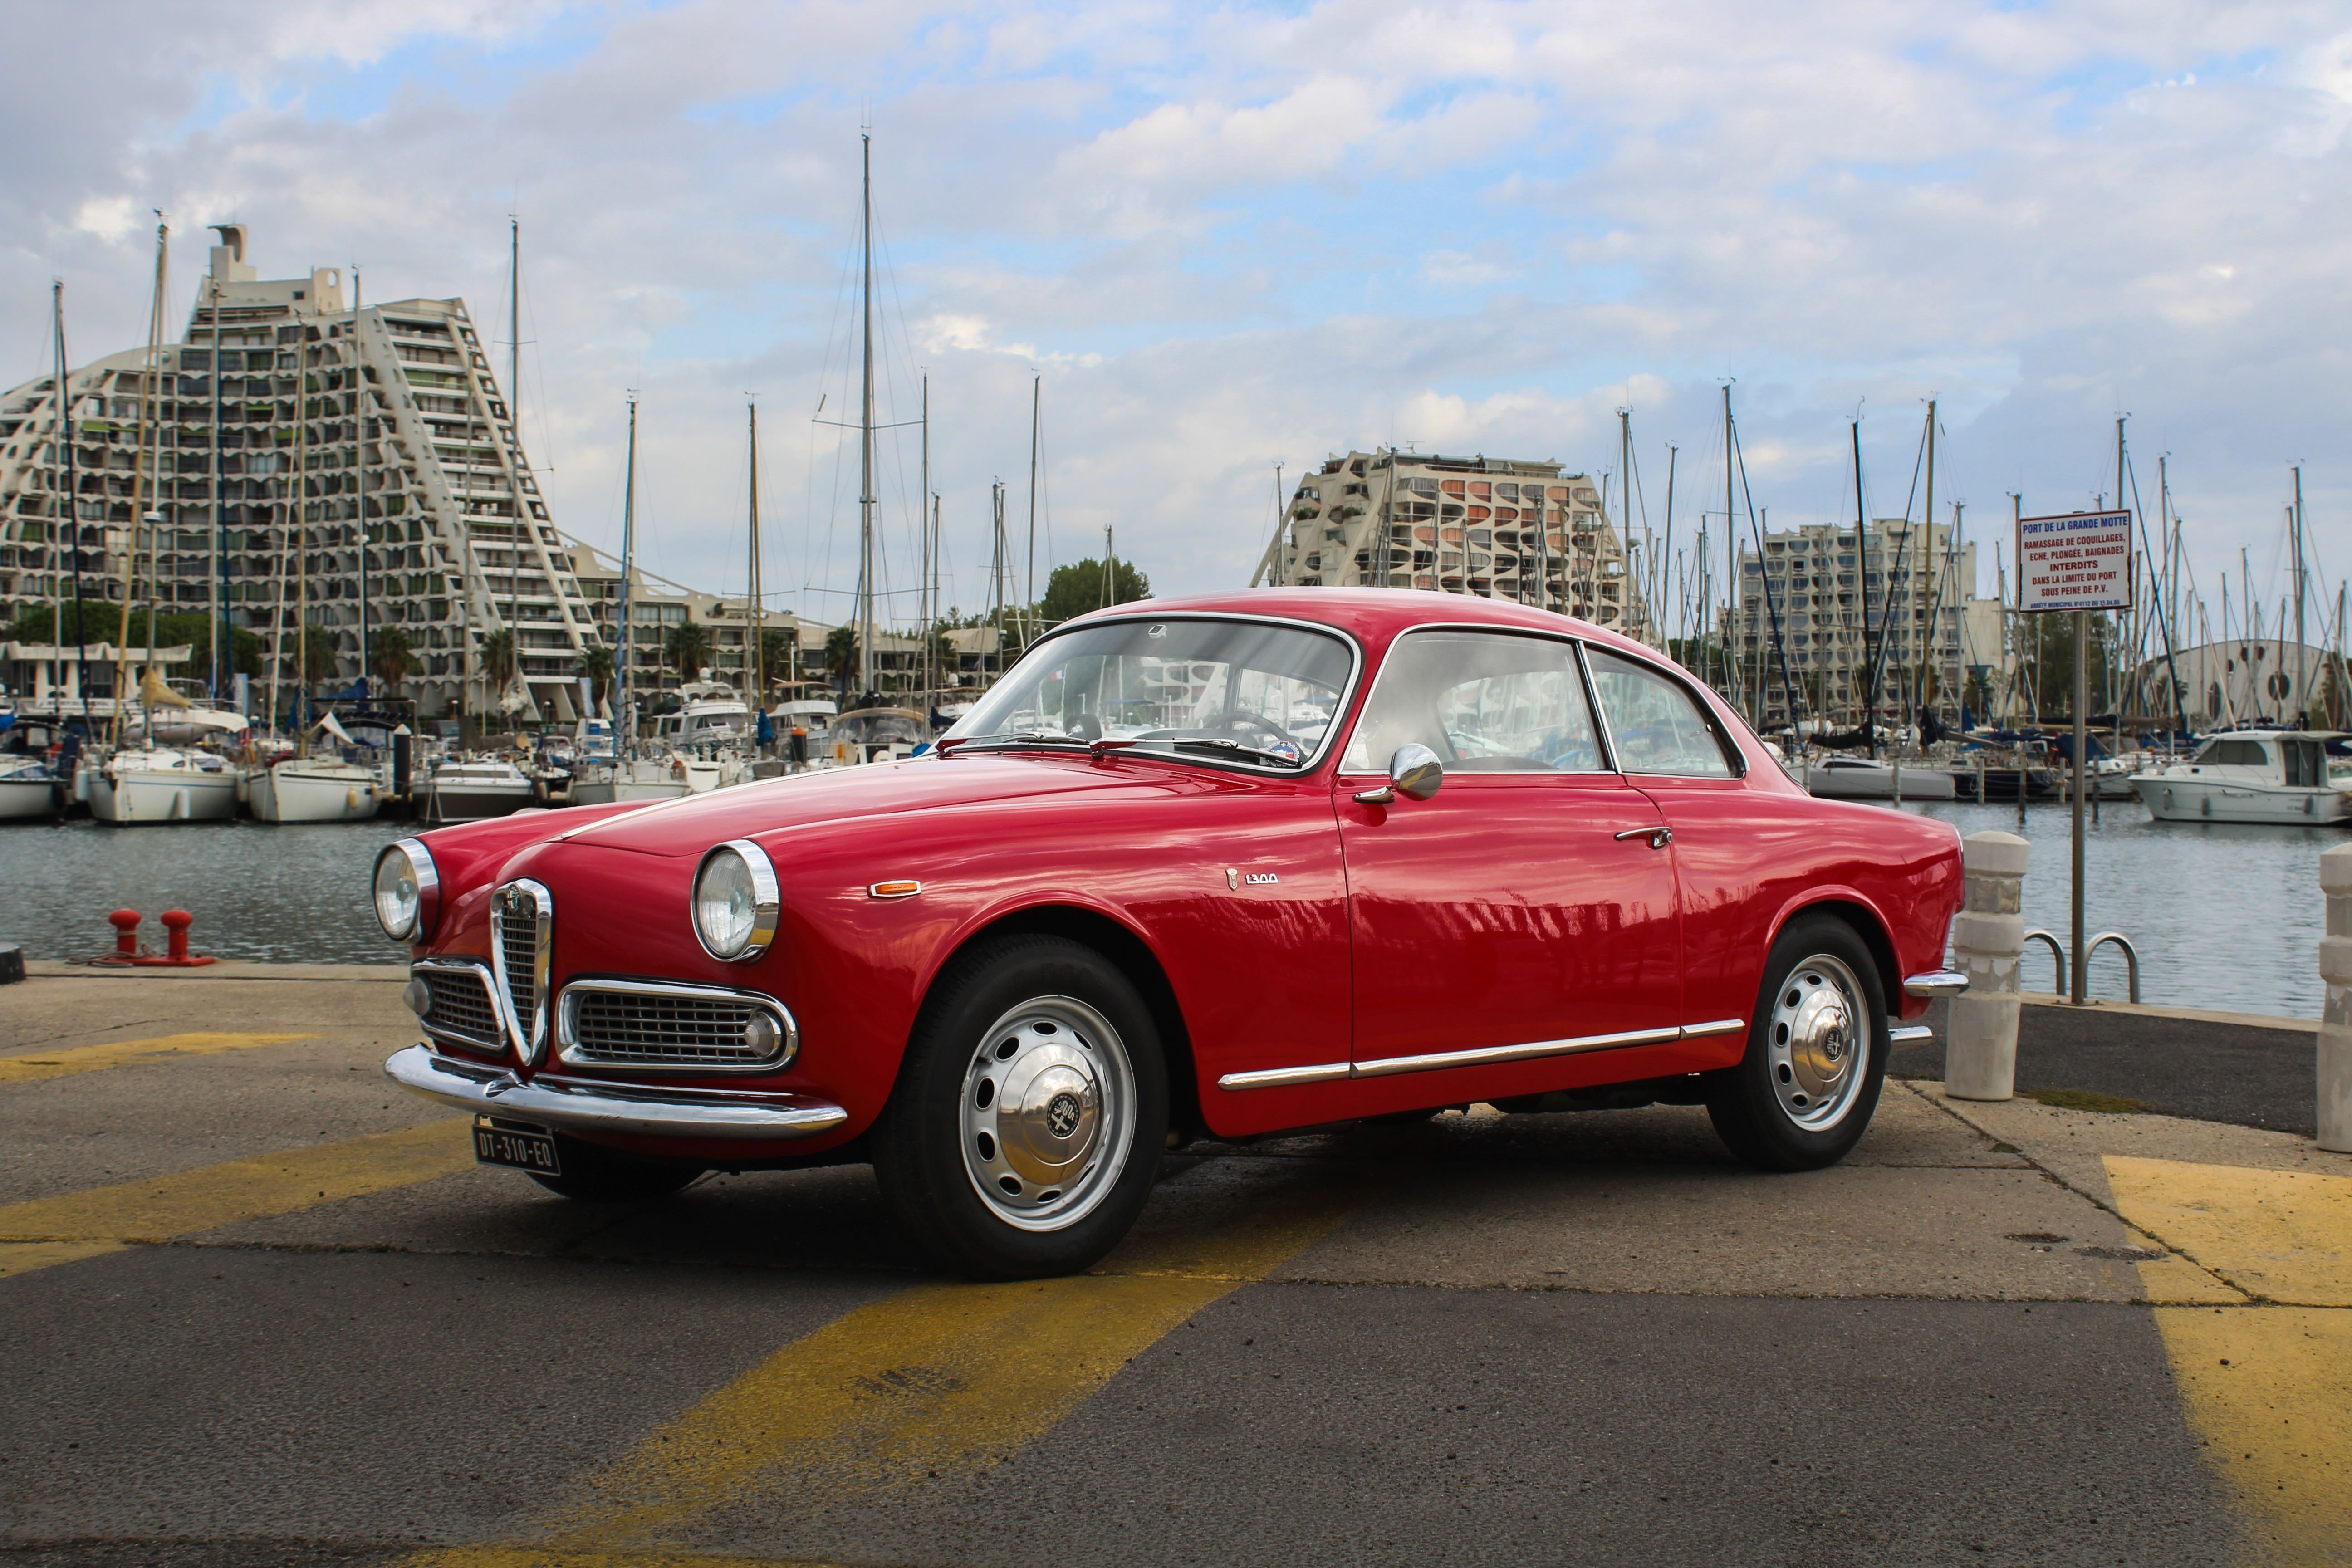 Why the Alfa Romeo Giulietta was discontinued